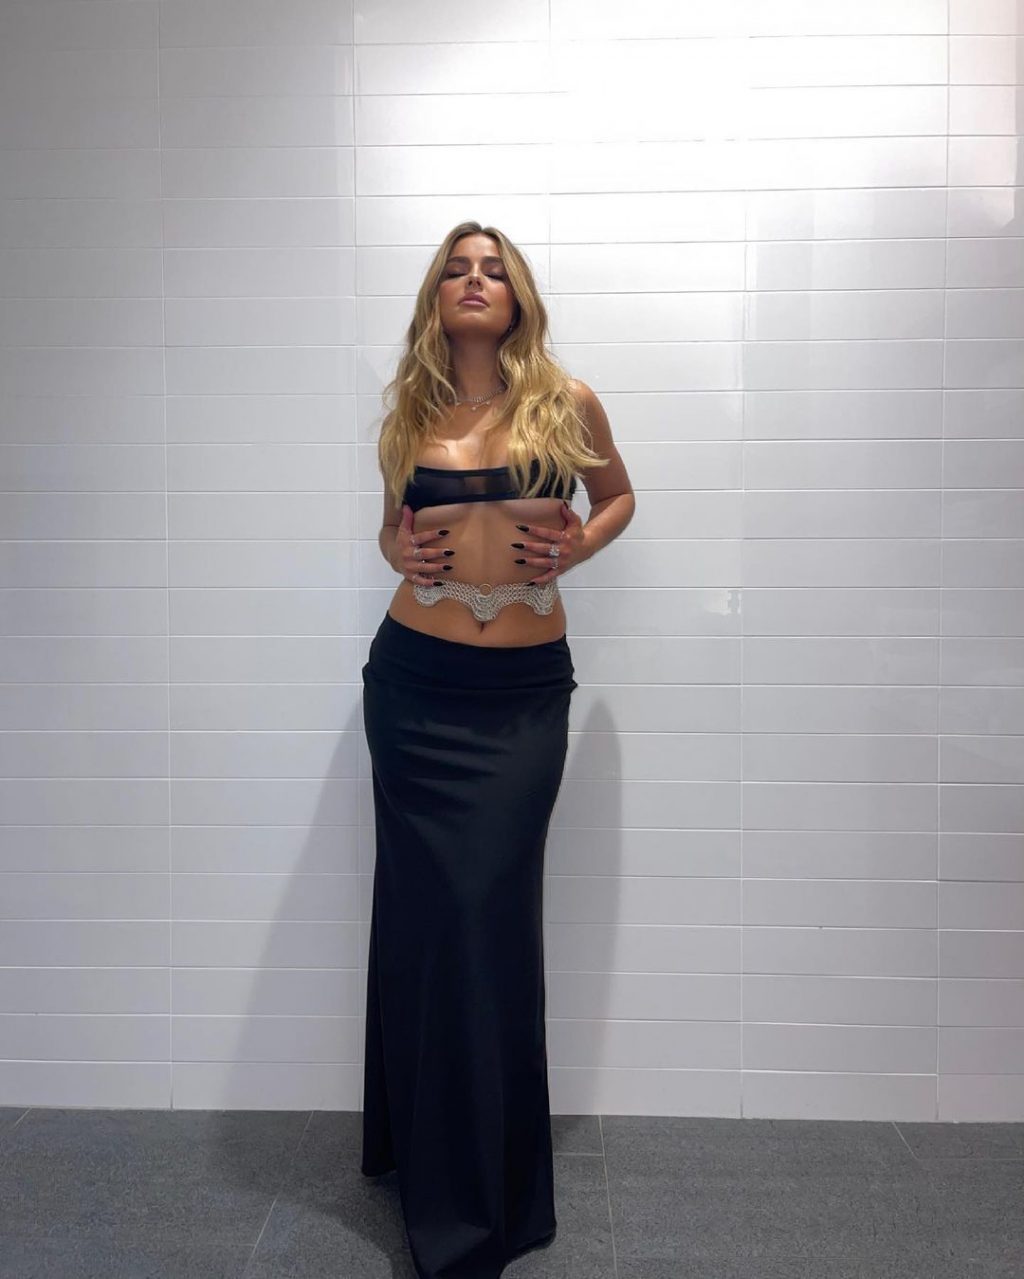 Addison Rae Flaunts Her Tits at the 2021 MTV Movie &amp; TV Awards (44 Photos)